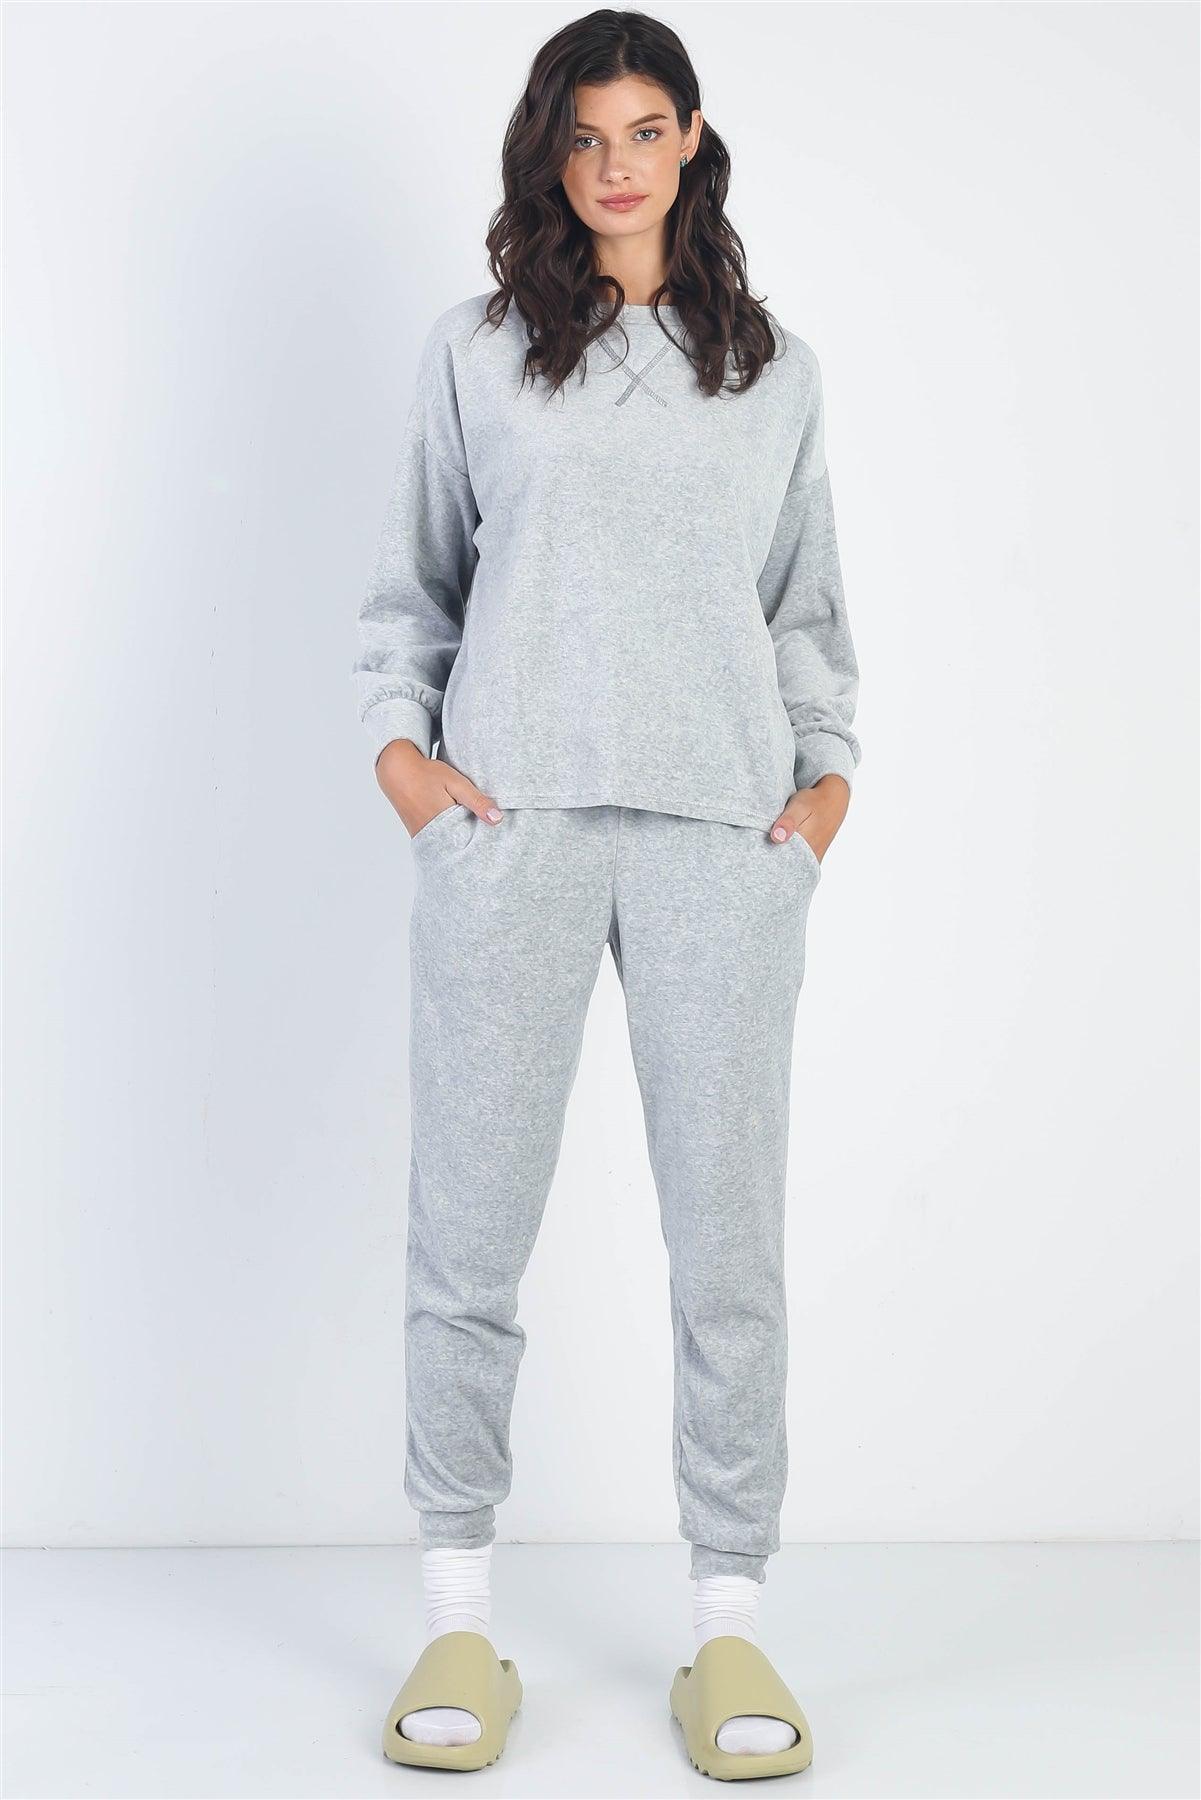 Heather Grey Velour Cotton Blend Long Sleeve Sweater & Pant Set  /1-1-1